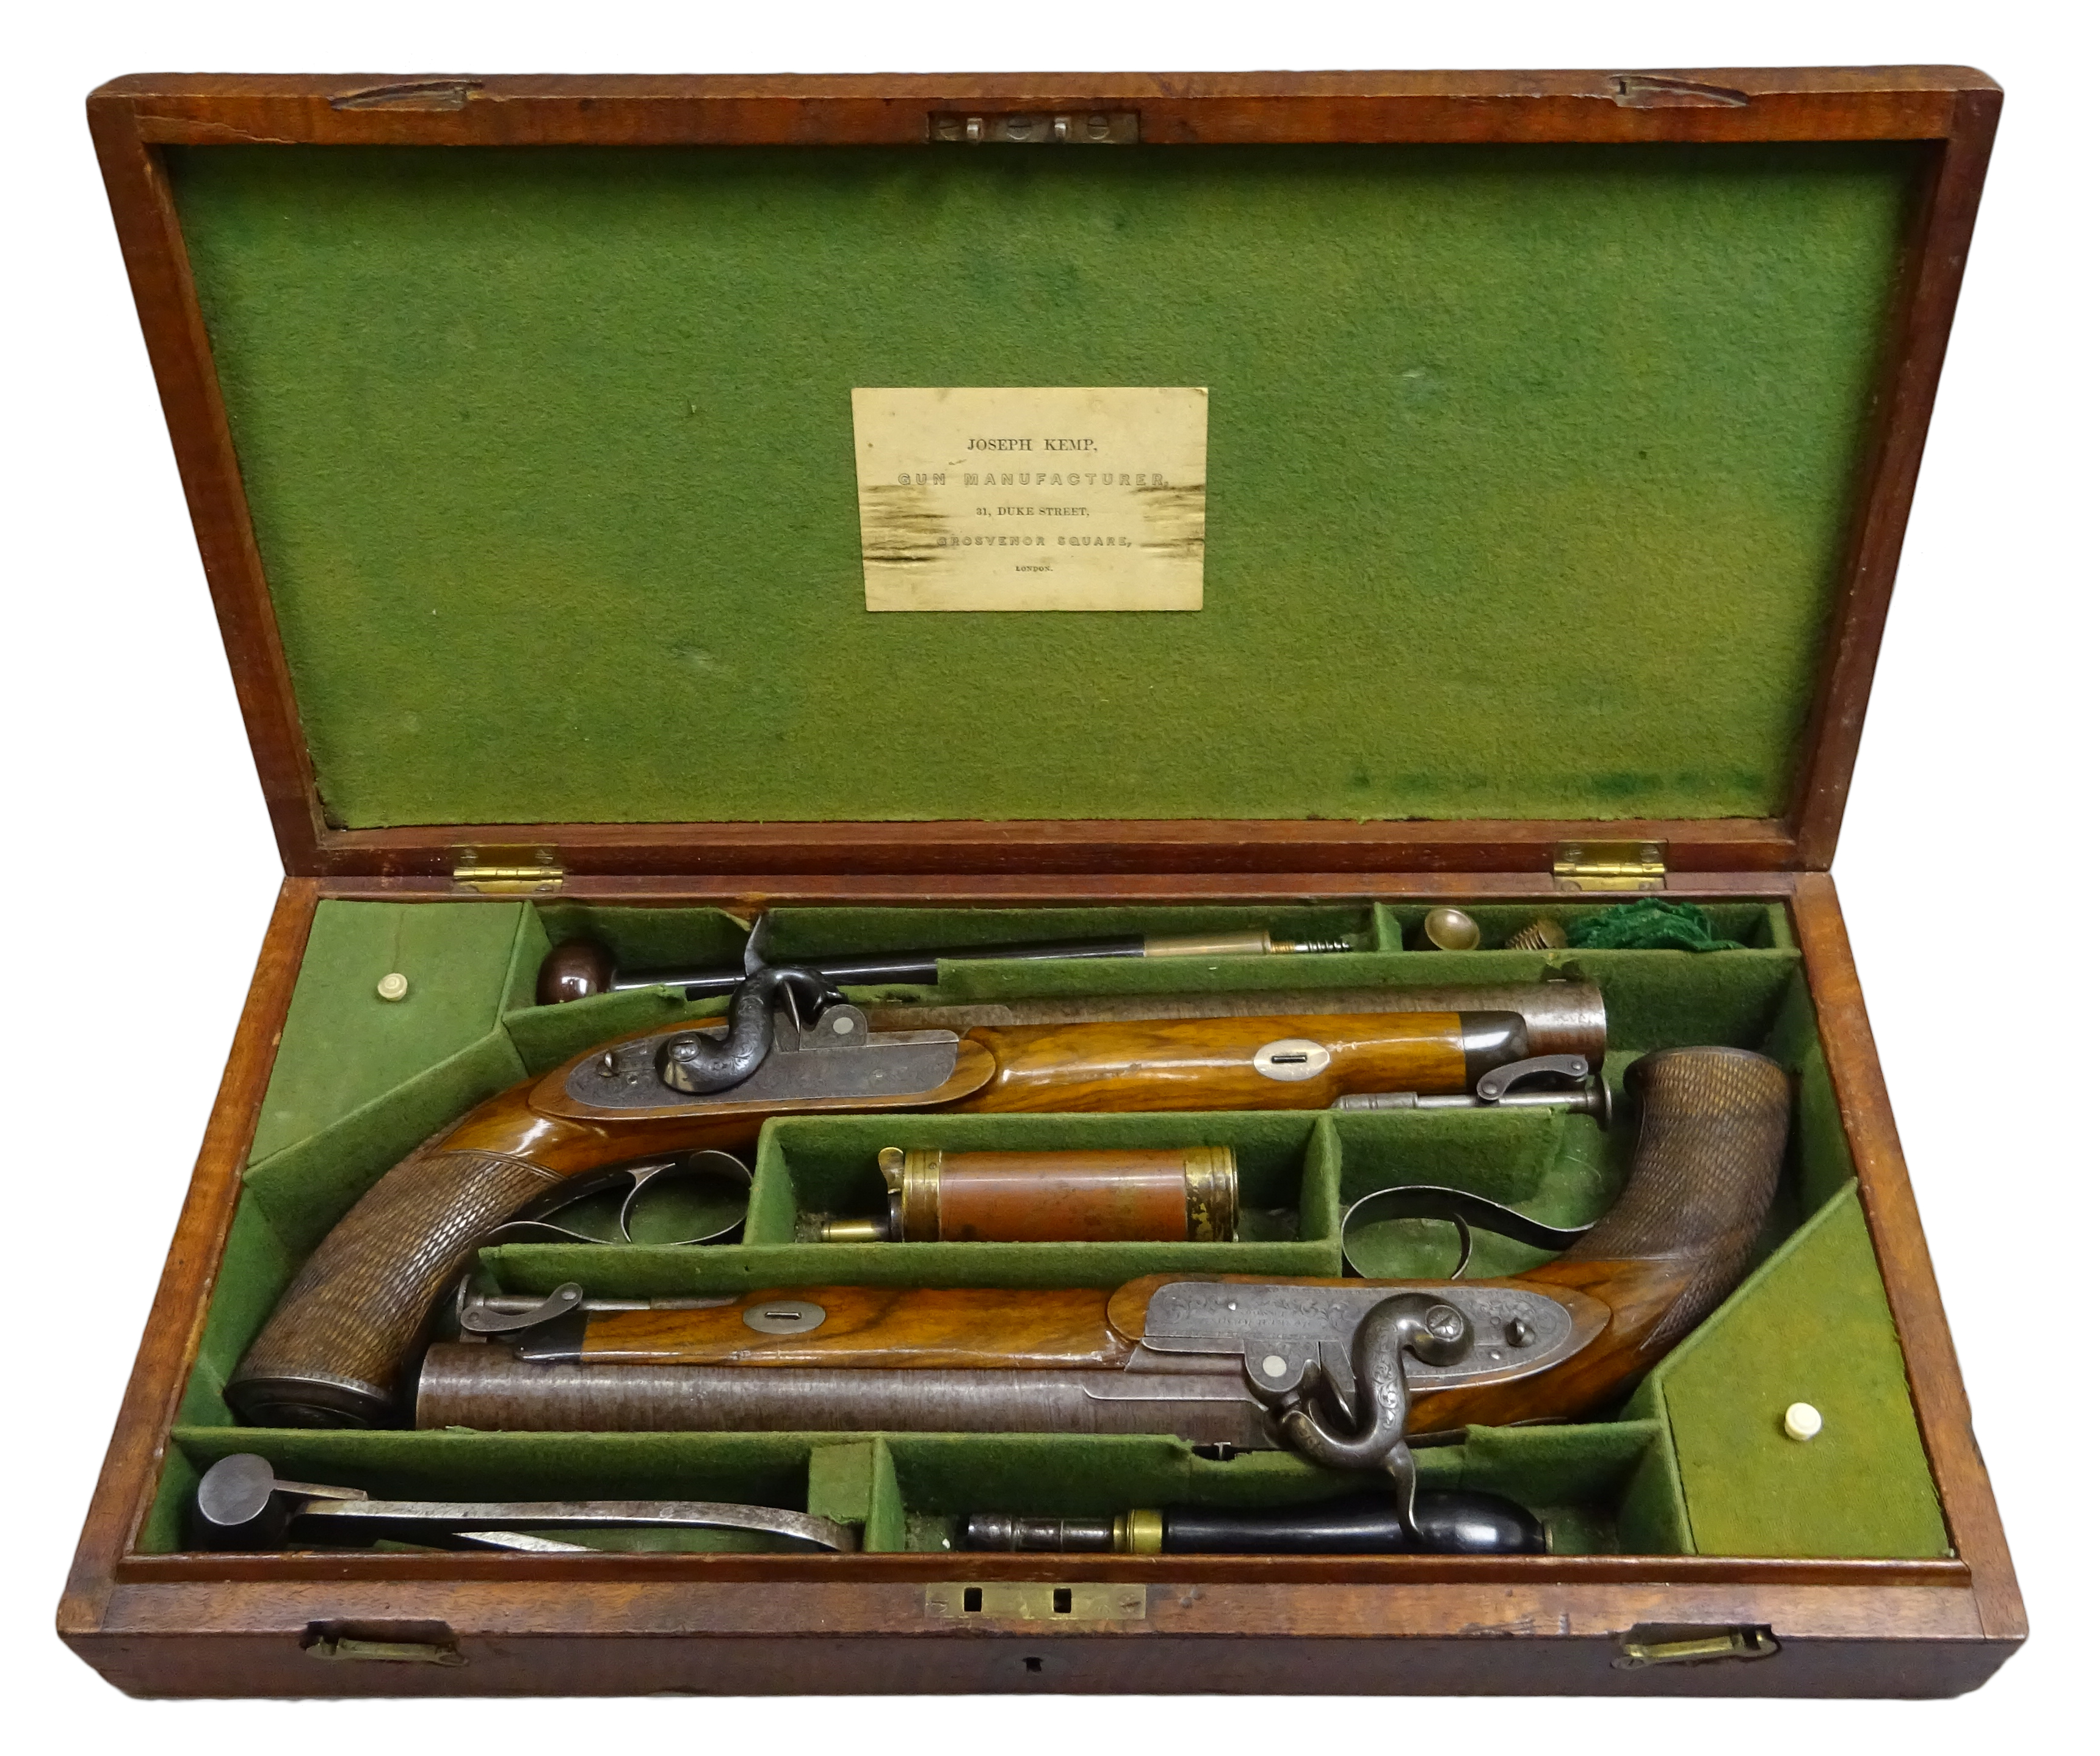 Fine pair of Officers's Percussion Pistols by Joseph Kemp, 31 Duke St, Grpsvenor Square, London, No. - Image 2 of 2